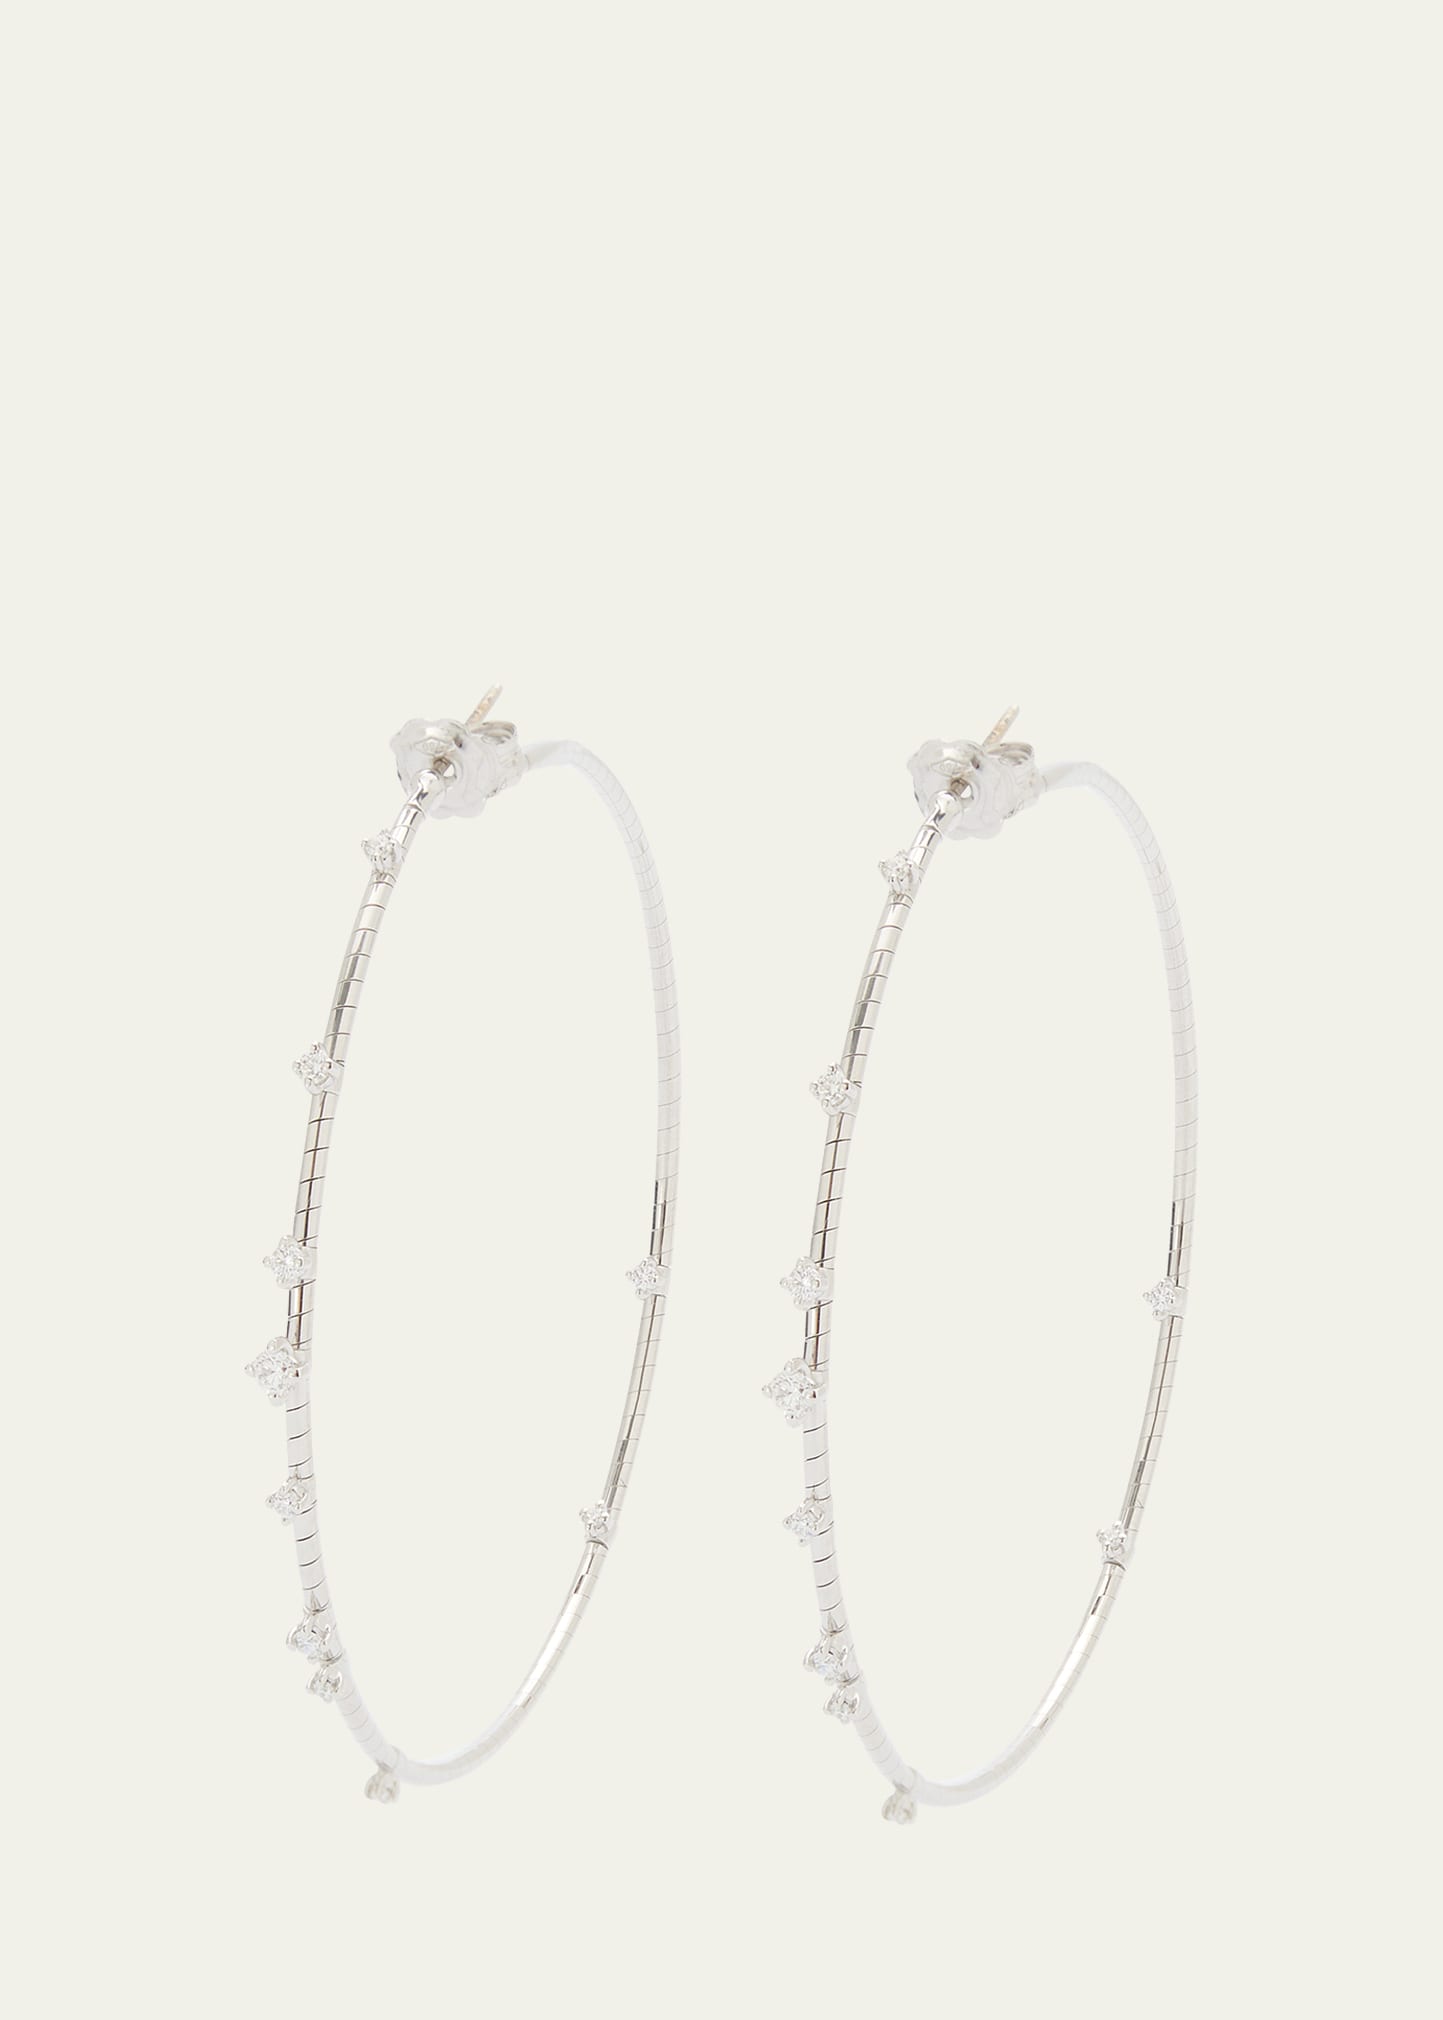 Mattia Cielo White Gold Hoop Earrings with Diamonds, 7.5cm